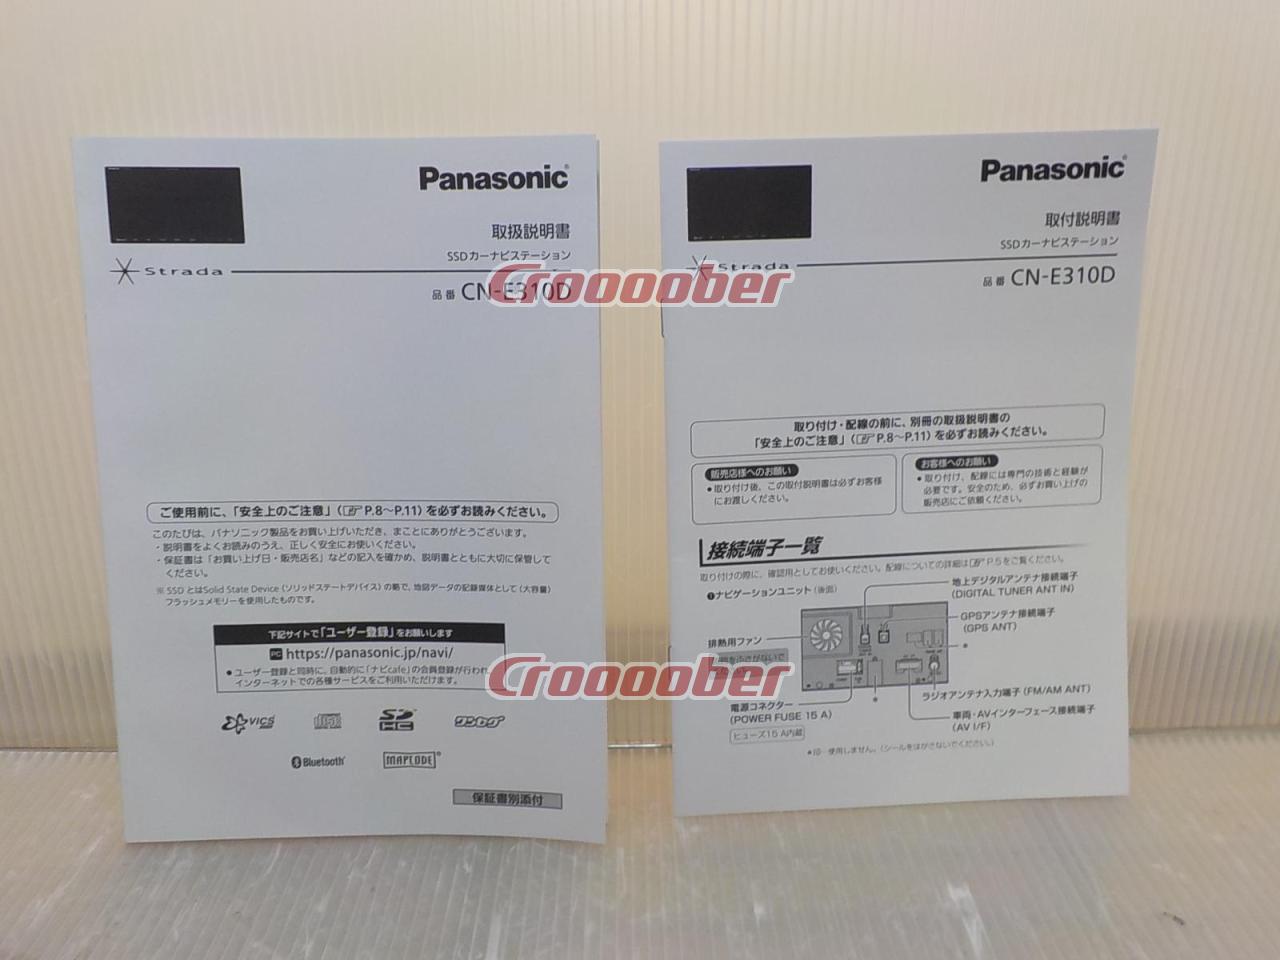 Panasonic CN-E310D 2019 Model With New Film / One Segment 